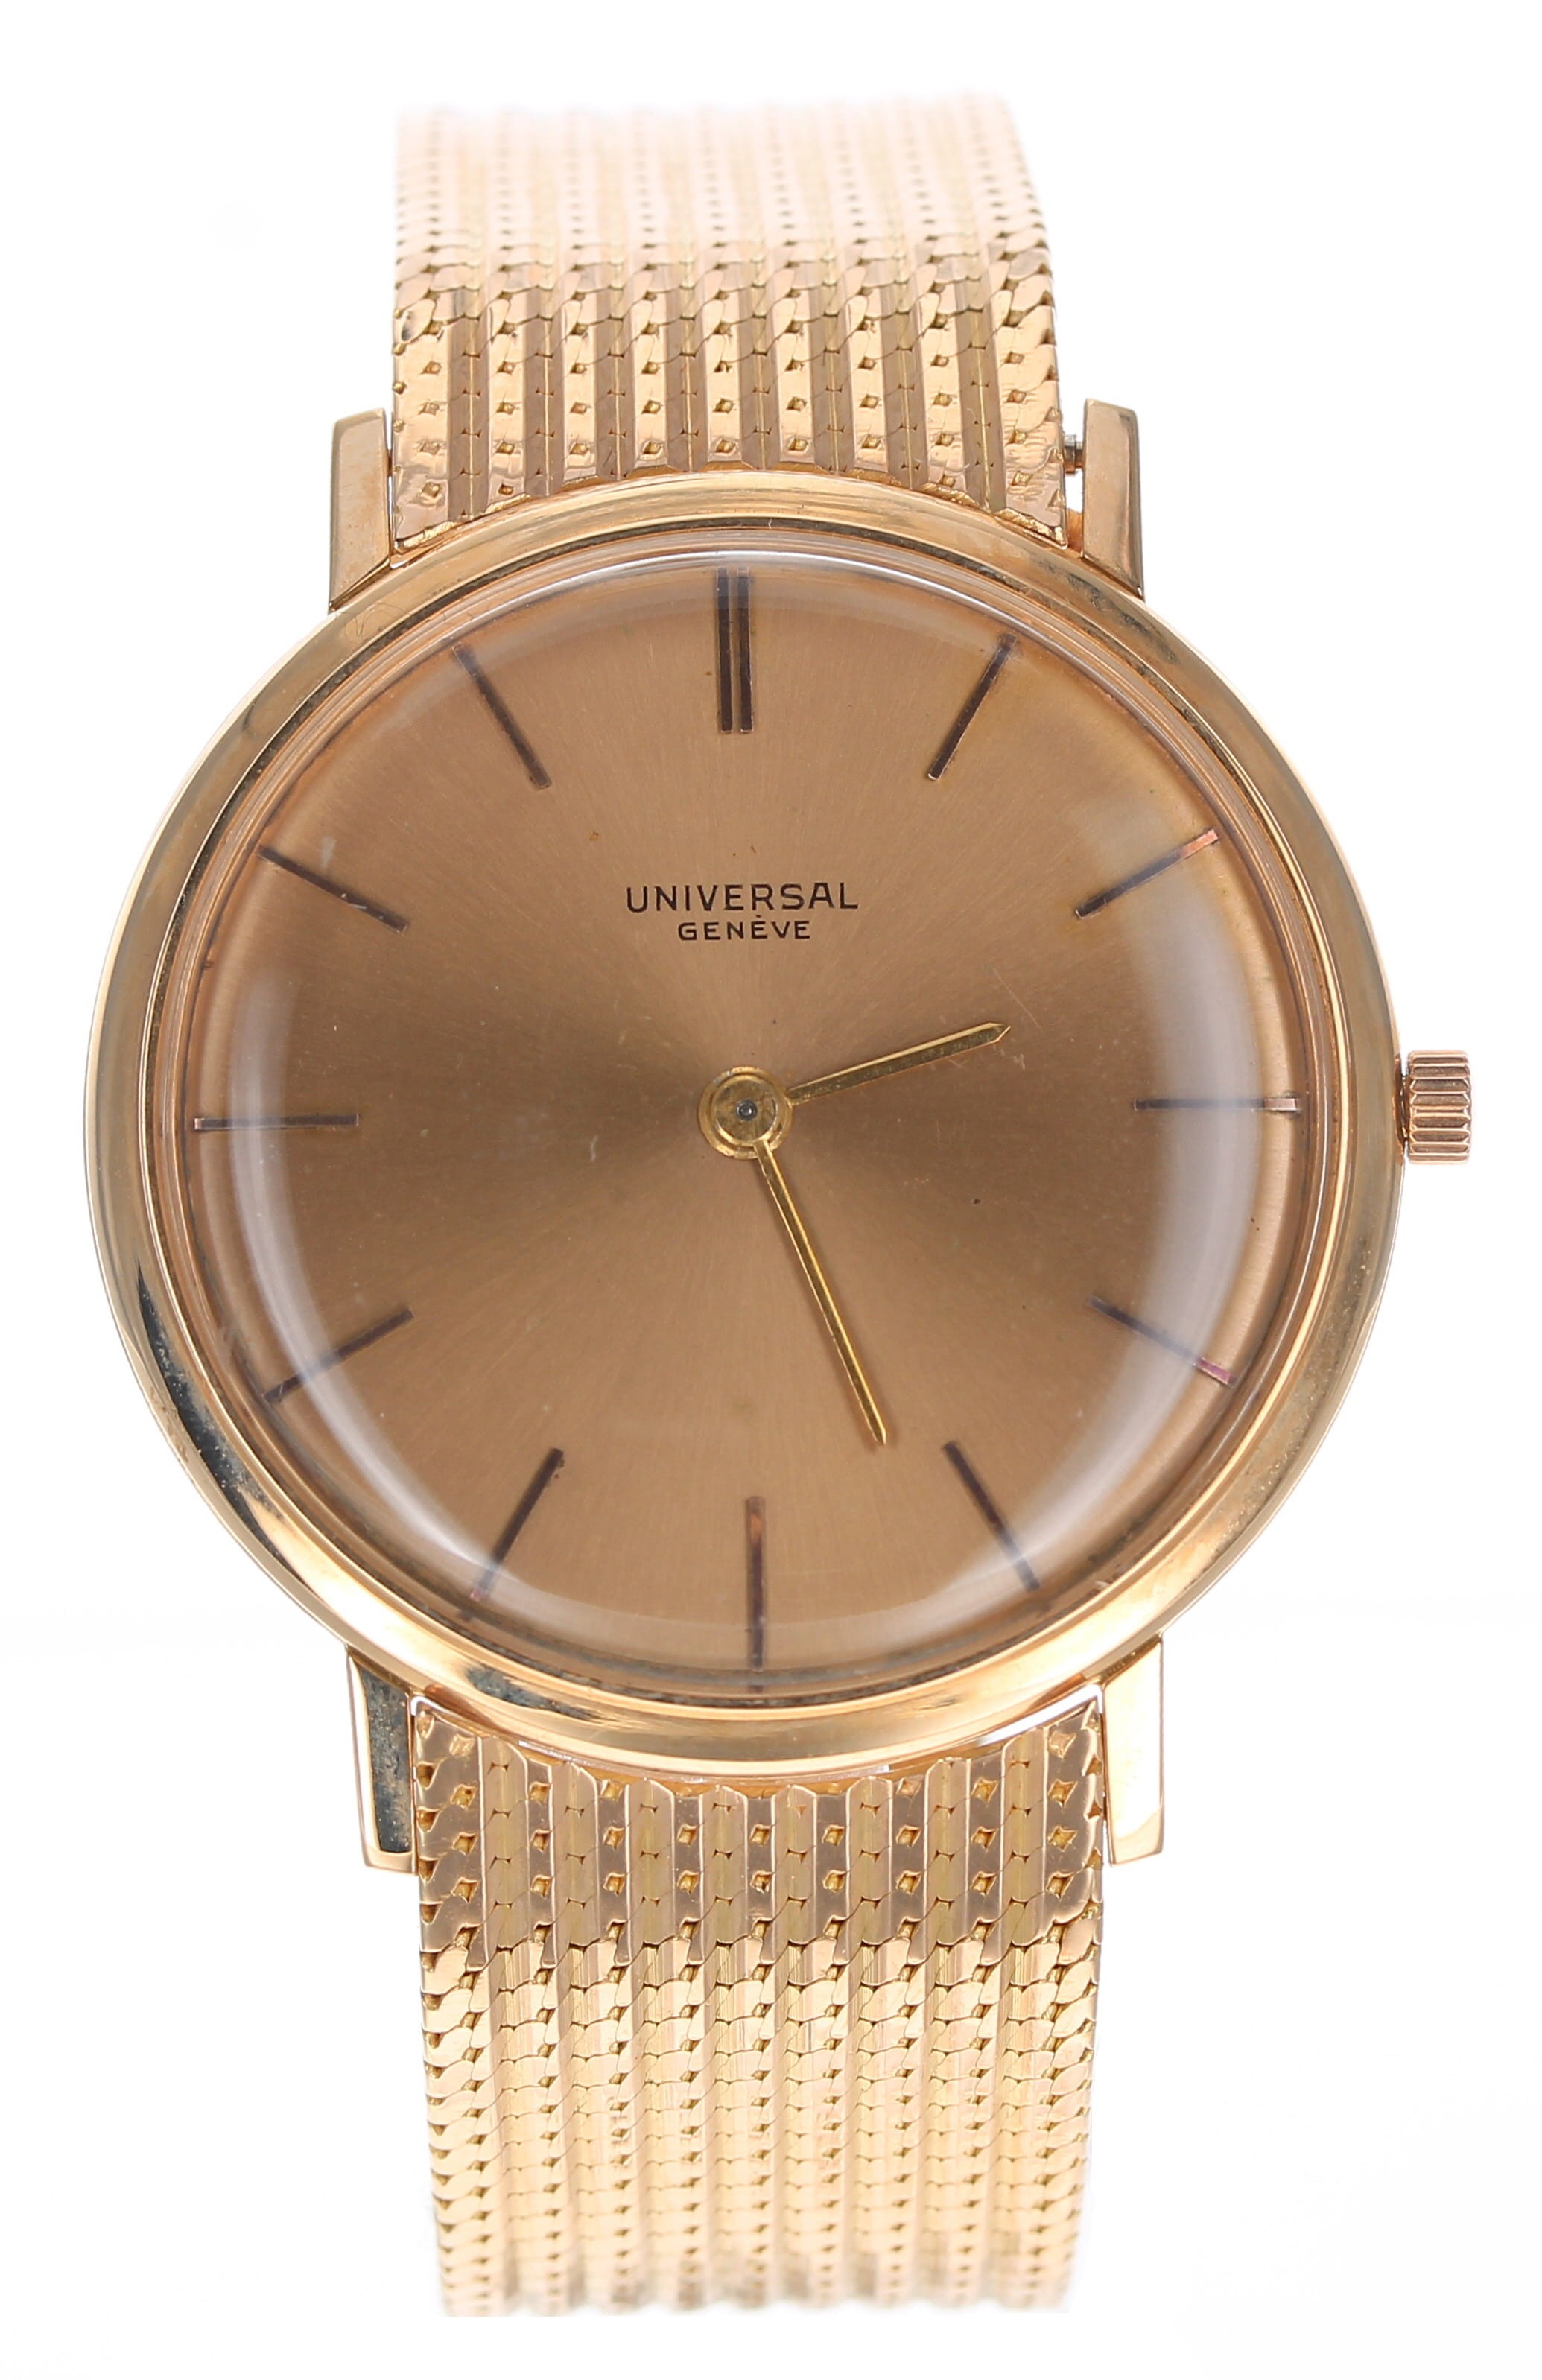 Universal Genéve slim 18ct pink gold gentleman's wristwatch, case no. 5320 5 9904 5, circular dial